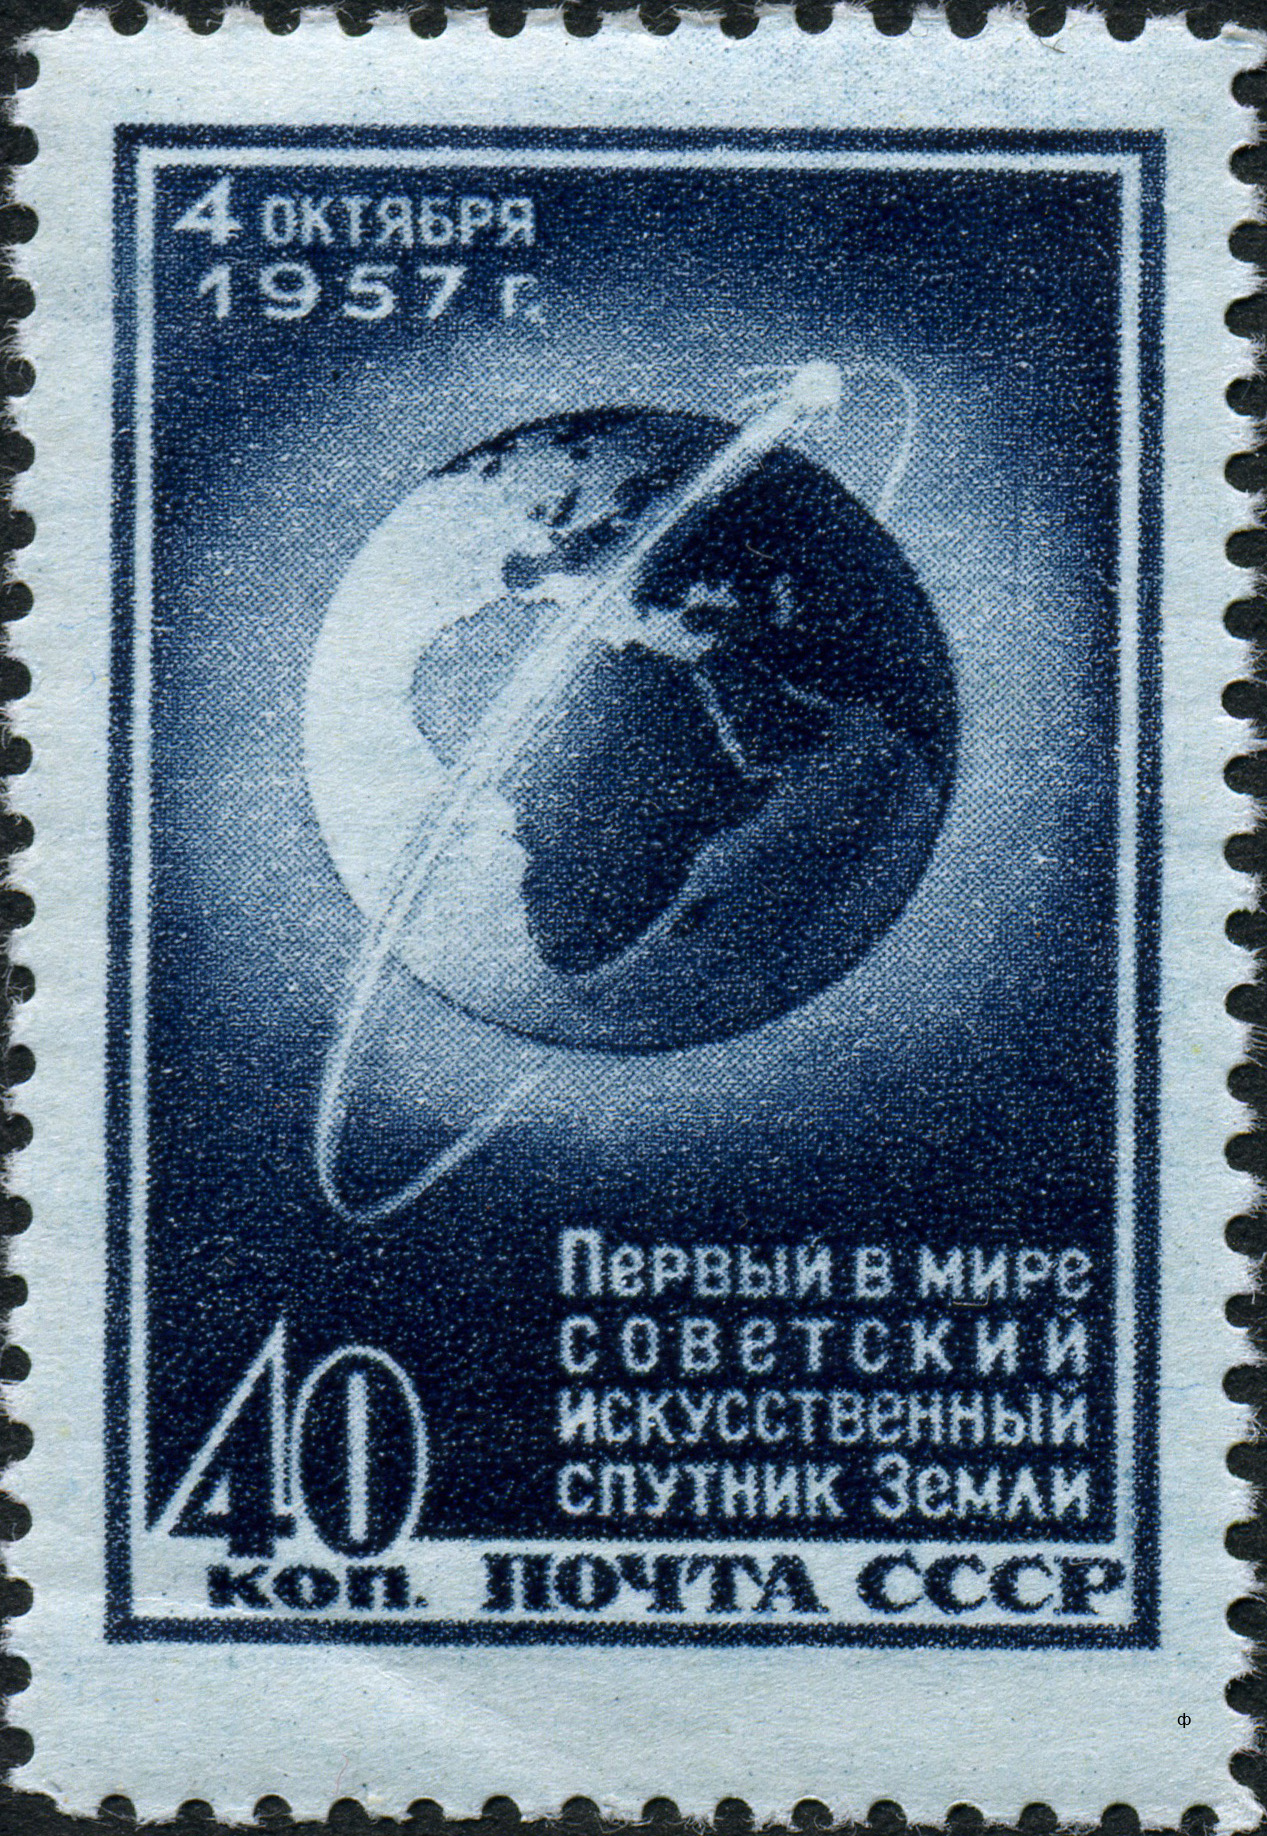 USSR postage stamp depicting the communist sta...